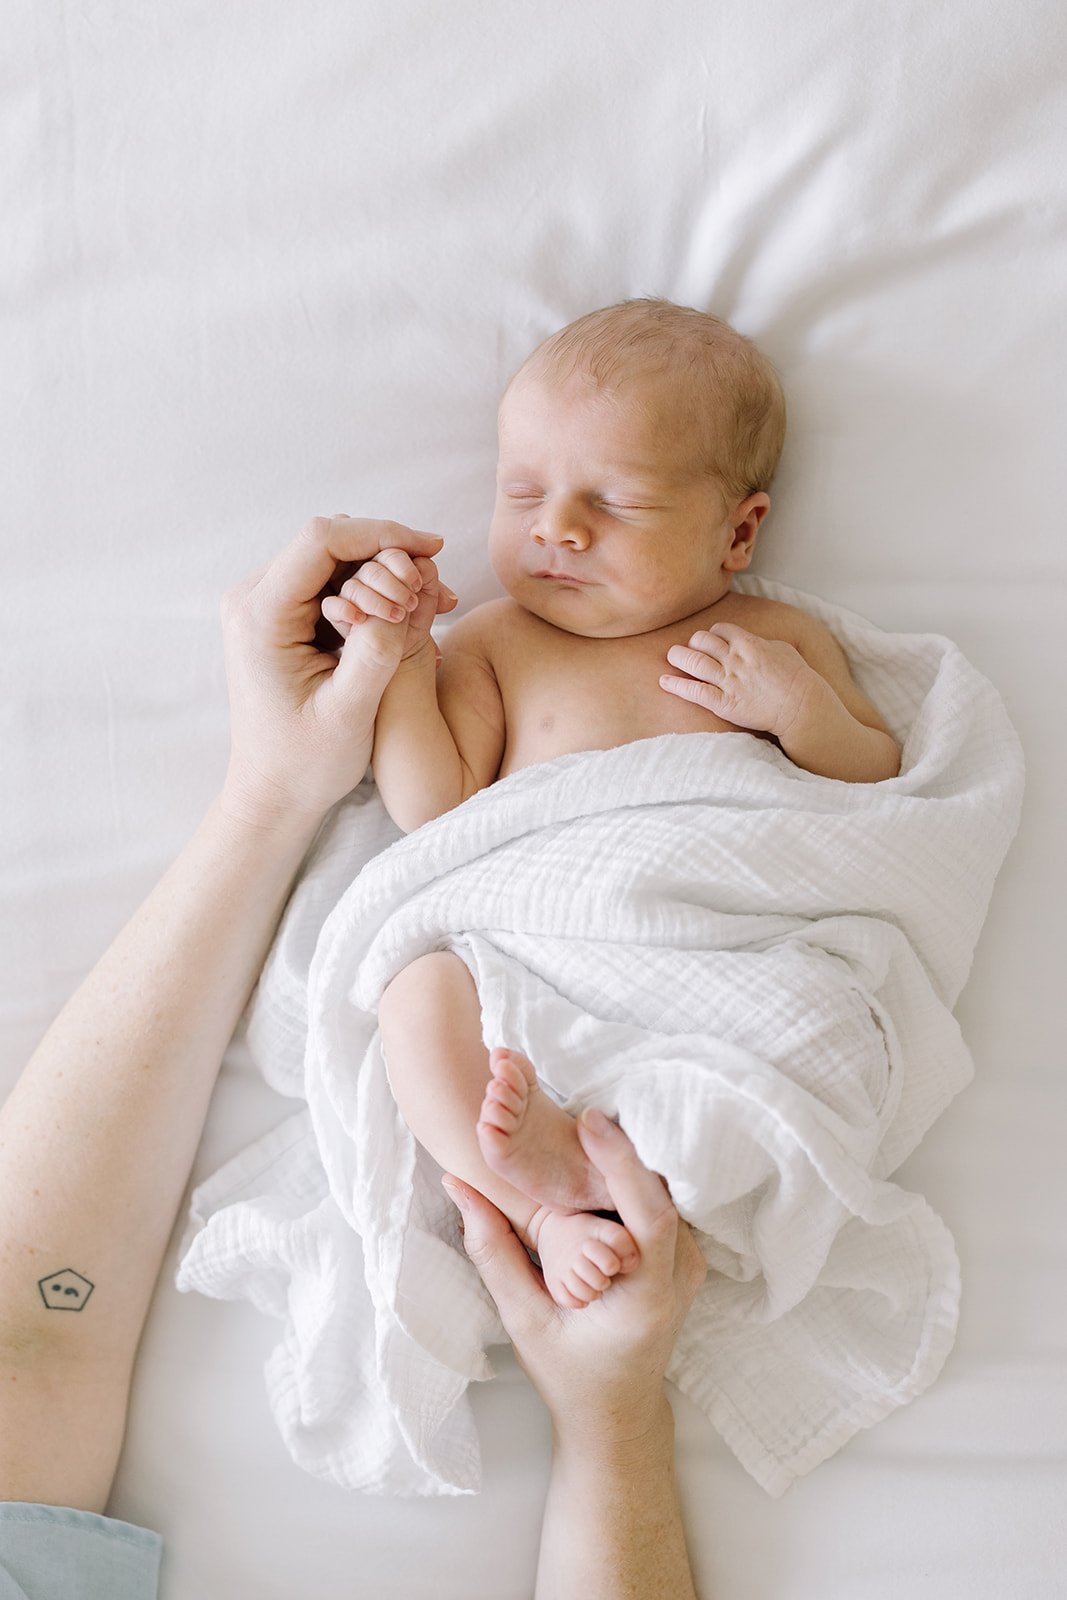 houston-newborn-photographer-kimberly-brooke-lifestlye-baby-368.jpg